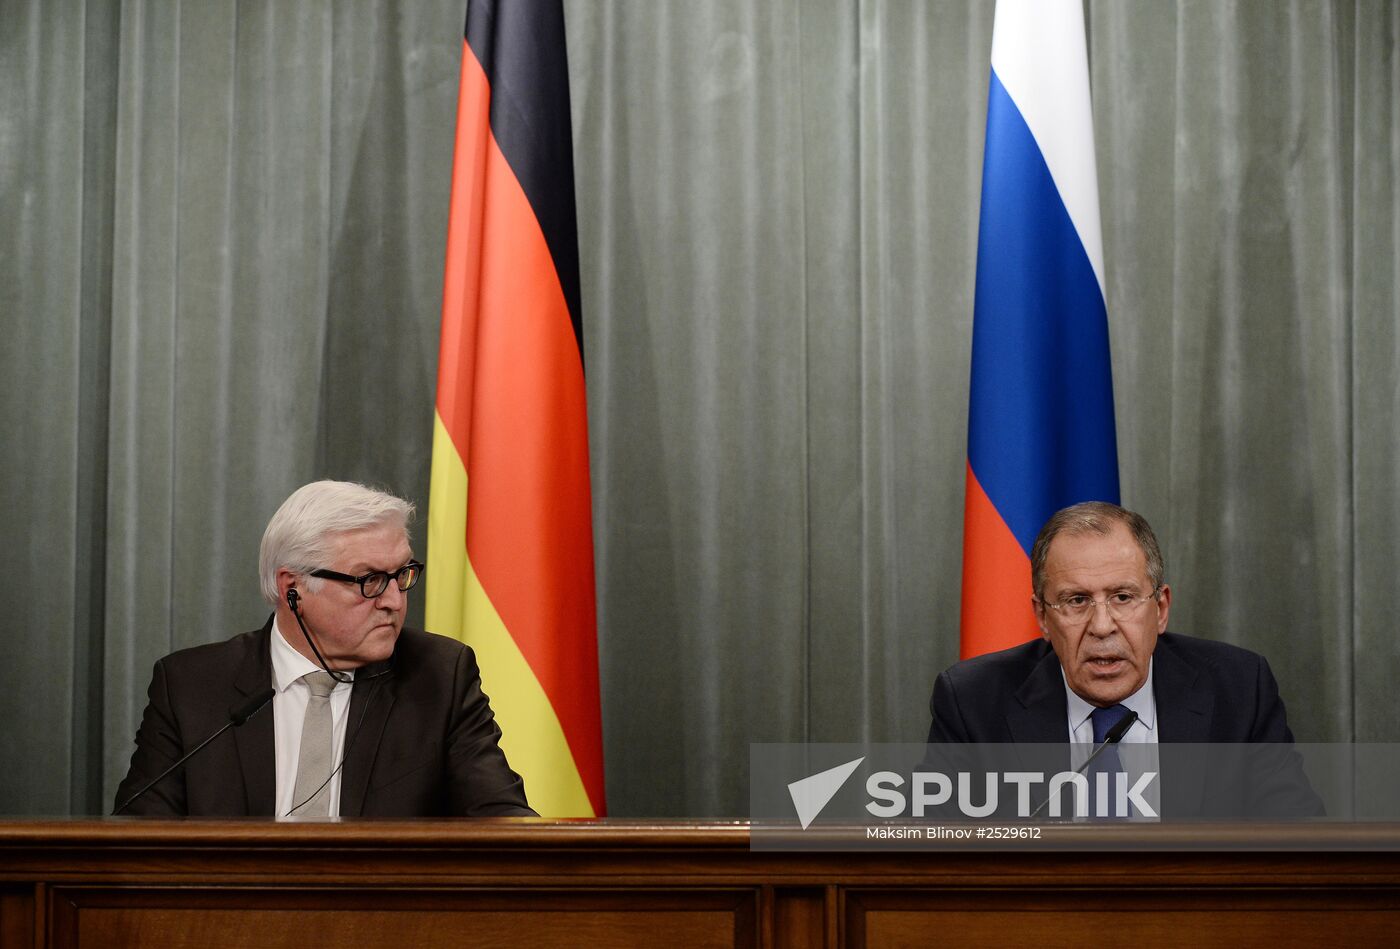 Sergei Lavrov meets with Frank-Walter Steinmeier